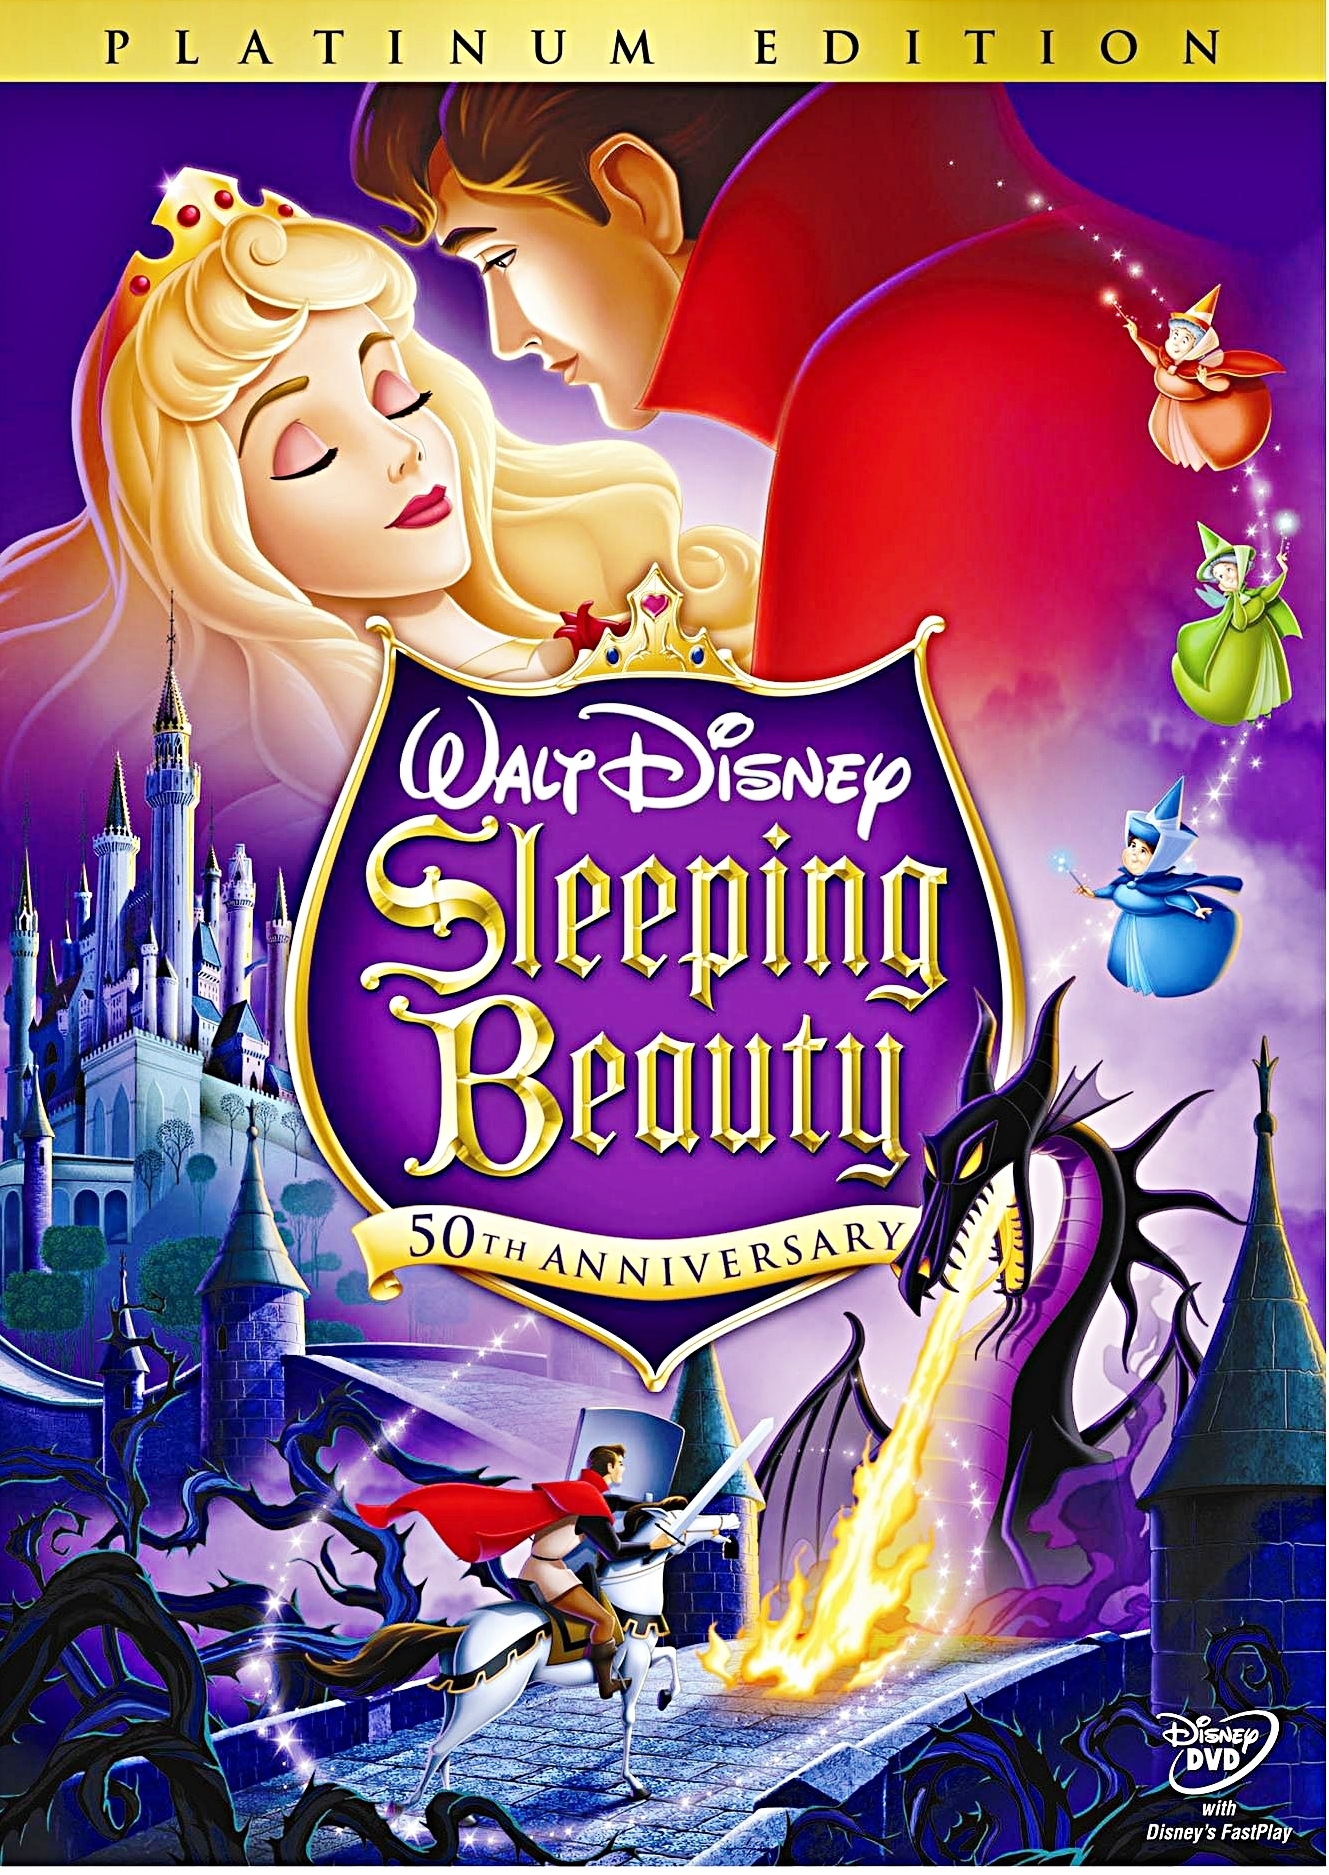 Sleeping-Beauty-Two-Disc-Platinum-Edition-Disney-DVD-Cover-walt-disney-characters-19286223-1329-1875.jpg